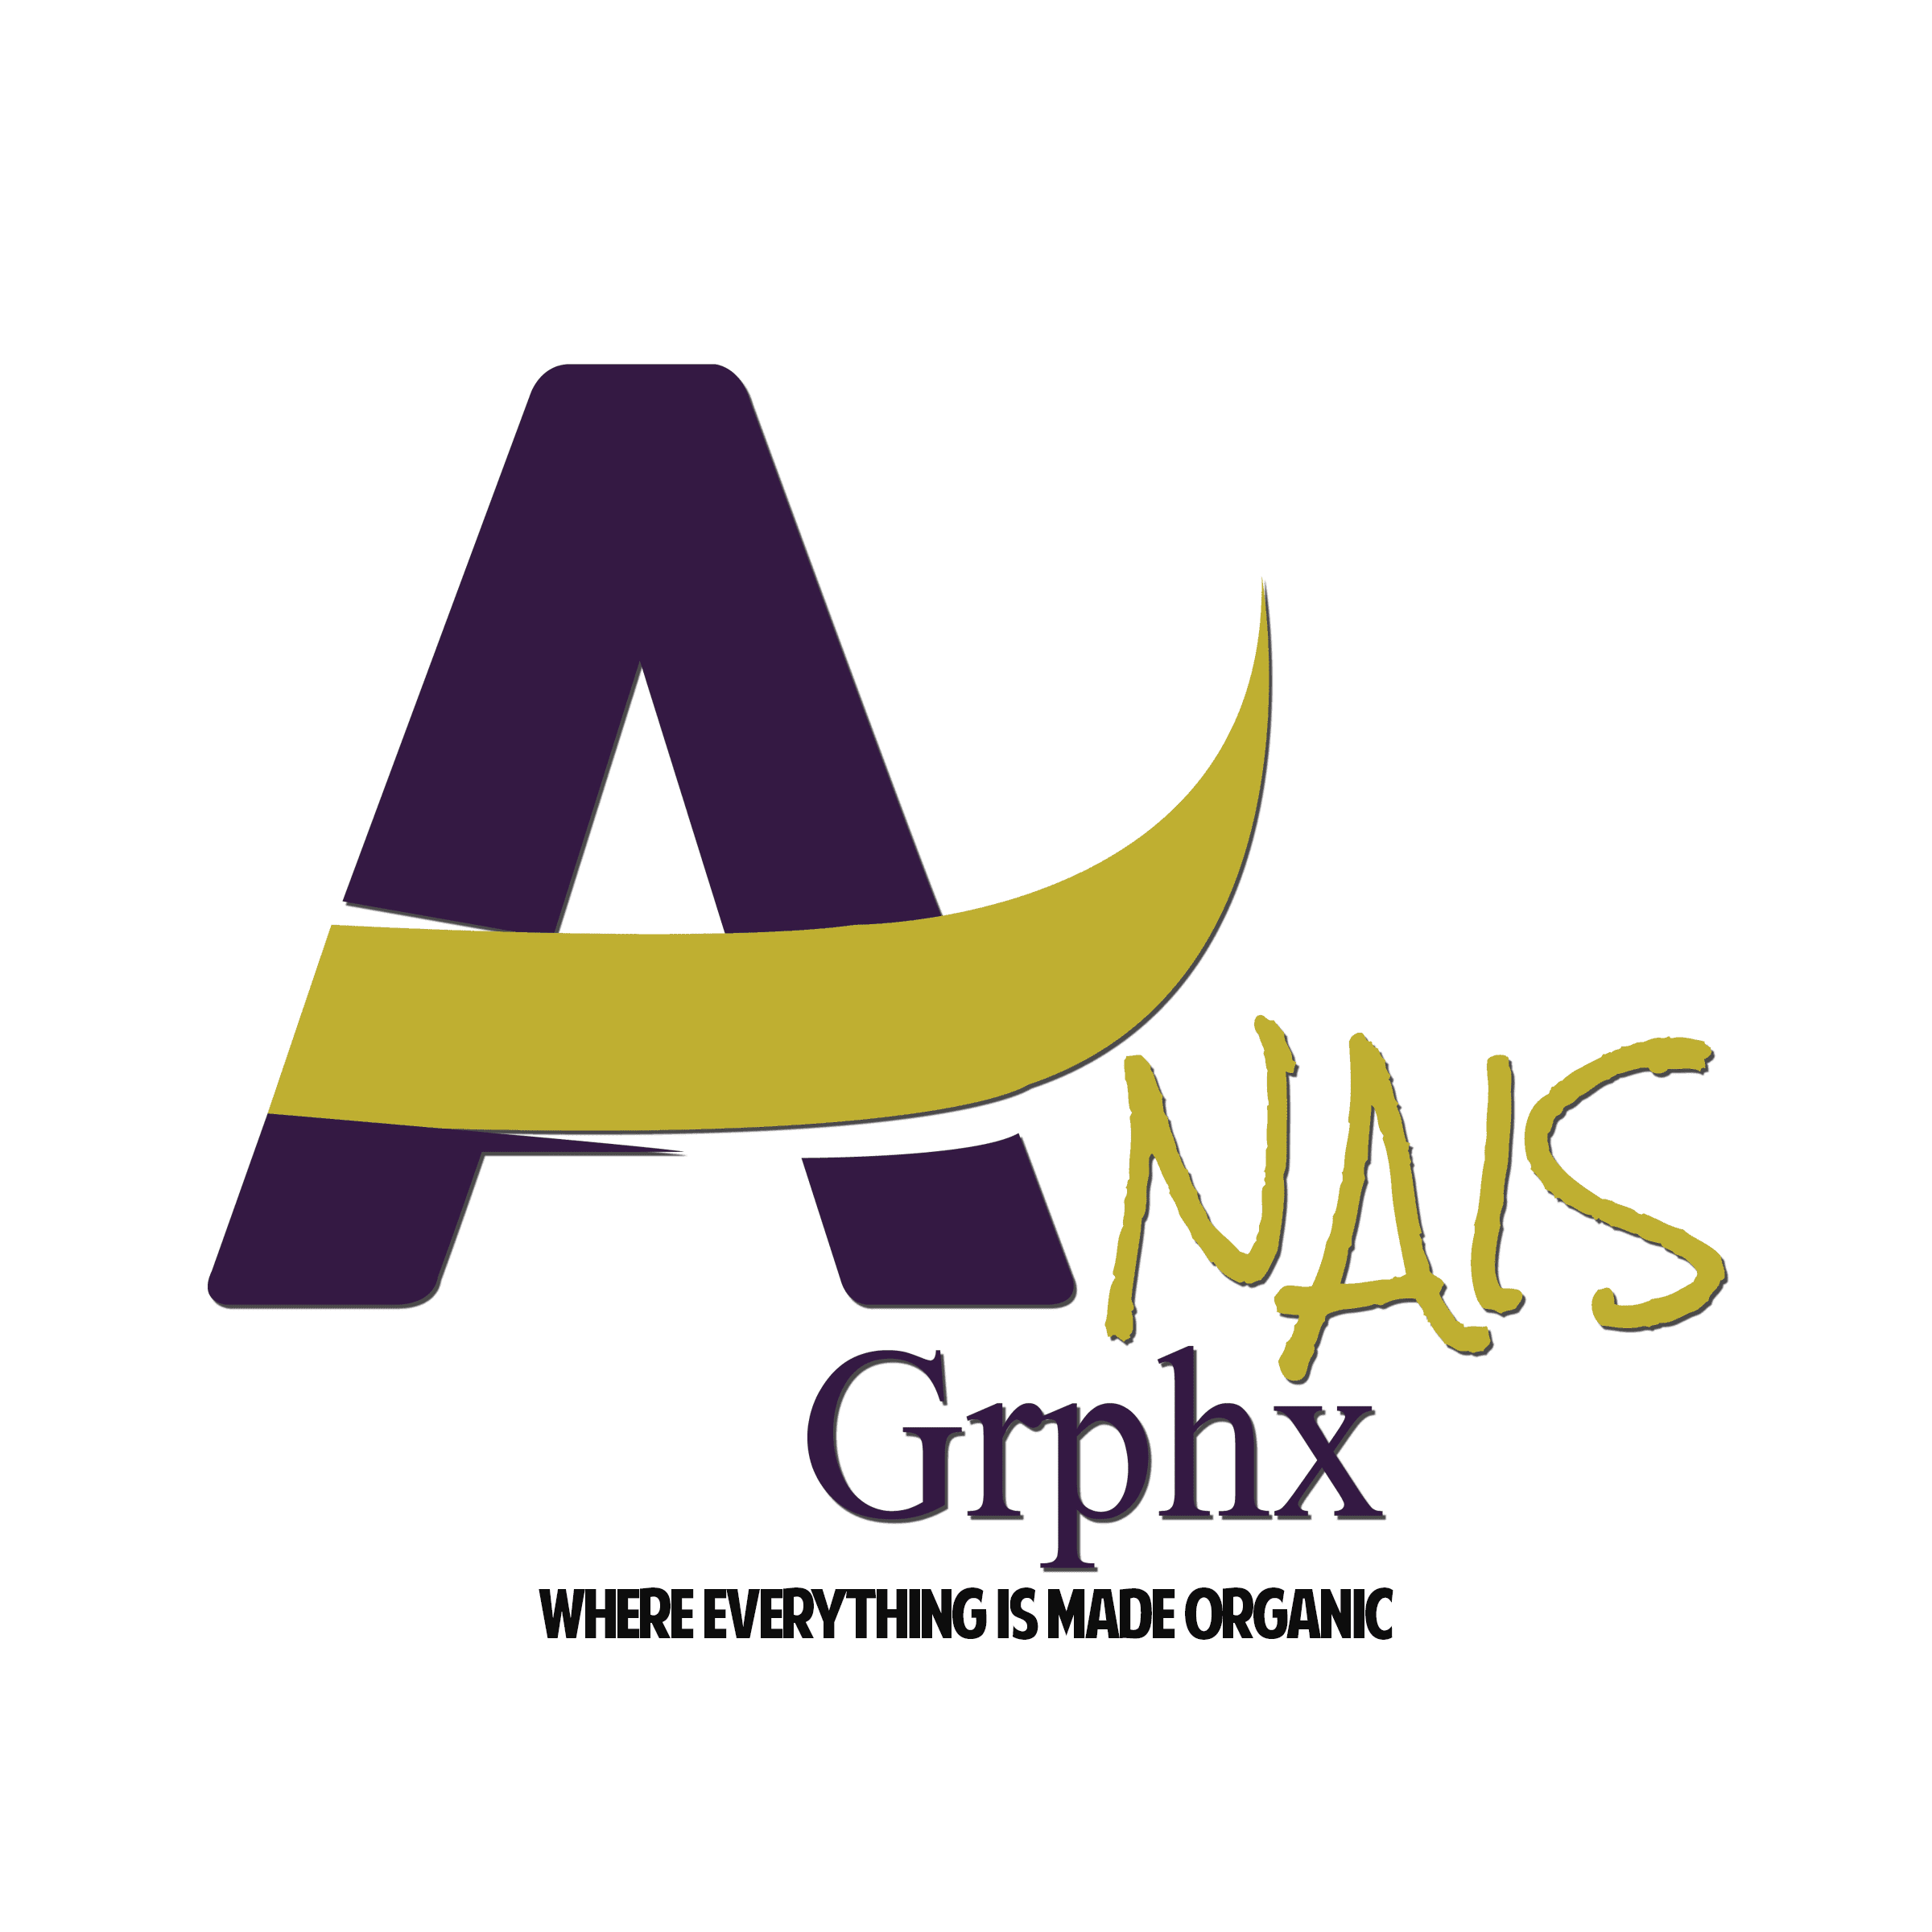 Anais Grphx